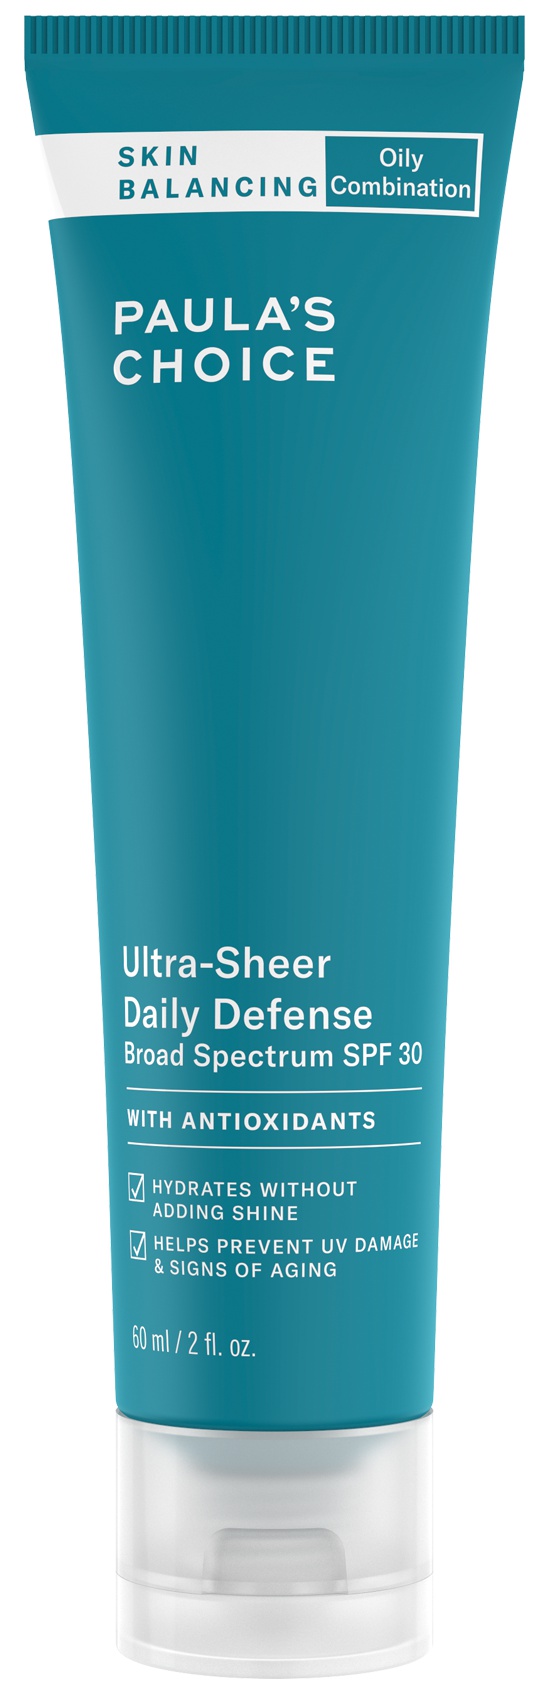 Paula's Choice Ultra-sheer Daily Defense Broad Spectrum 30 SPF